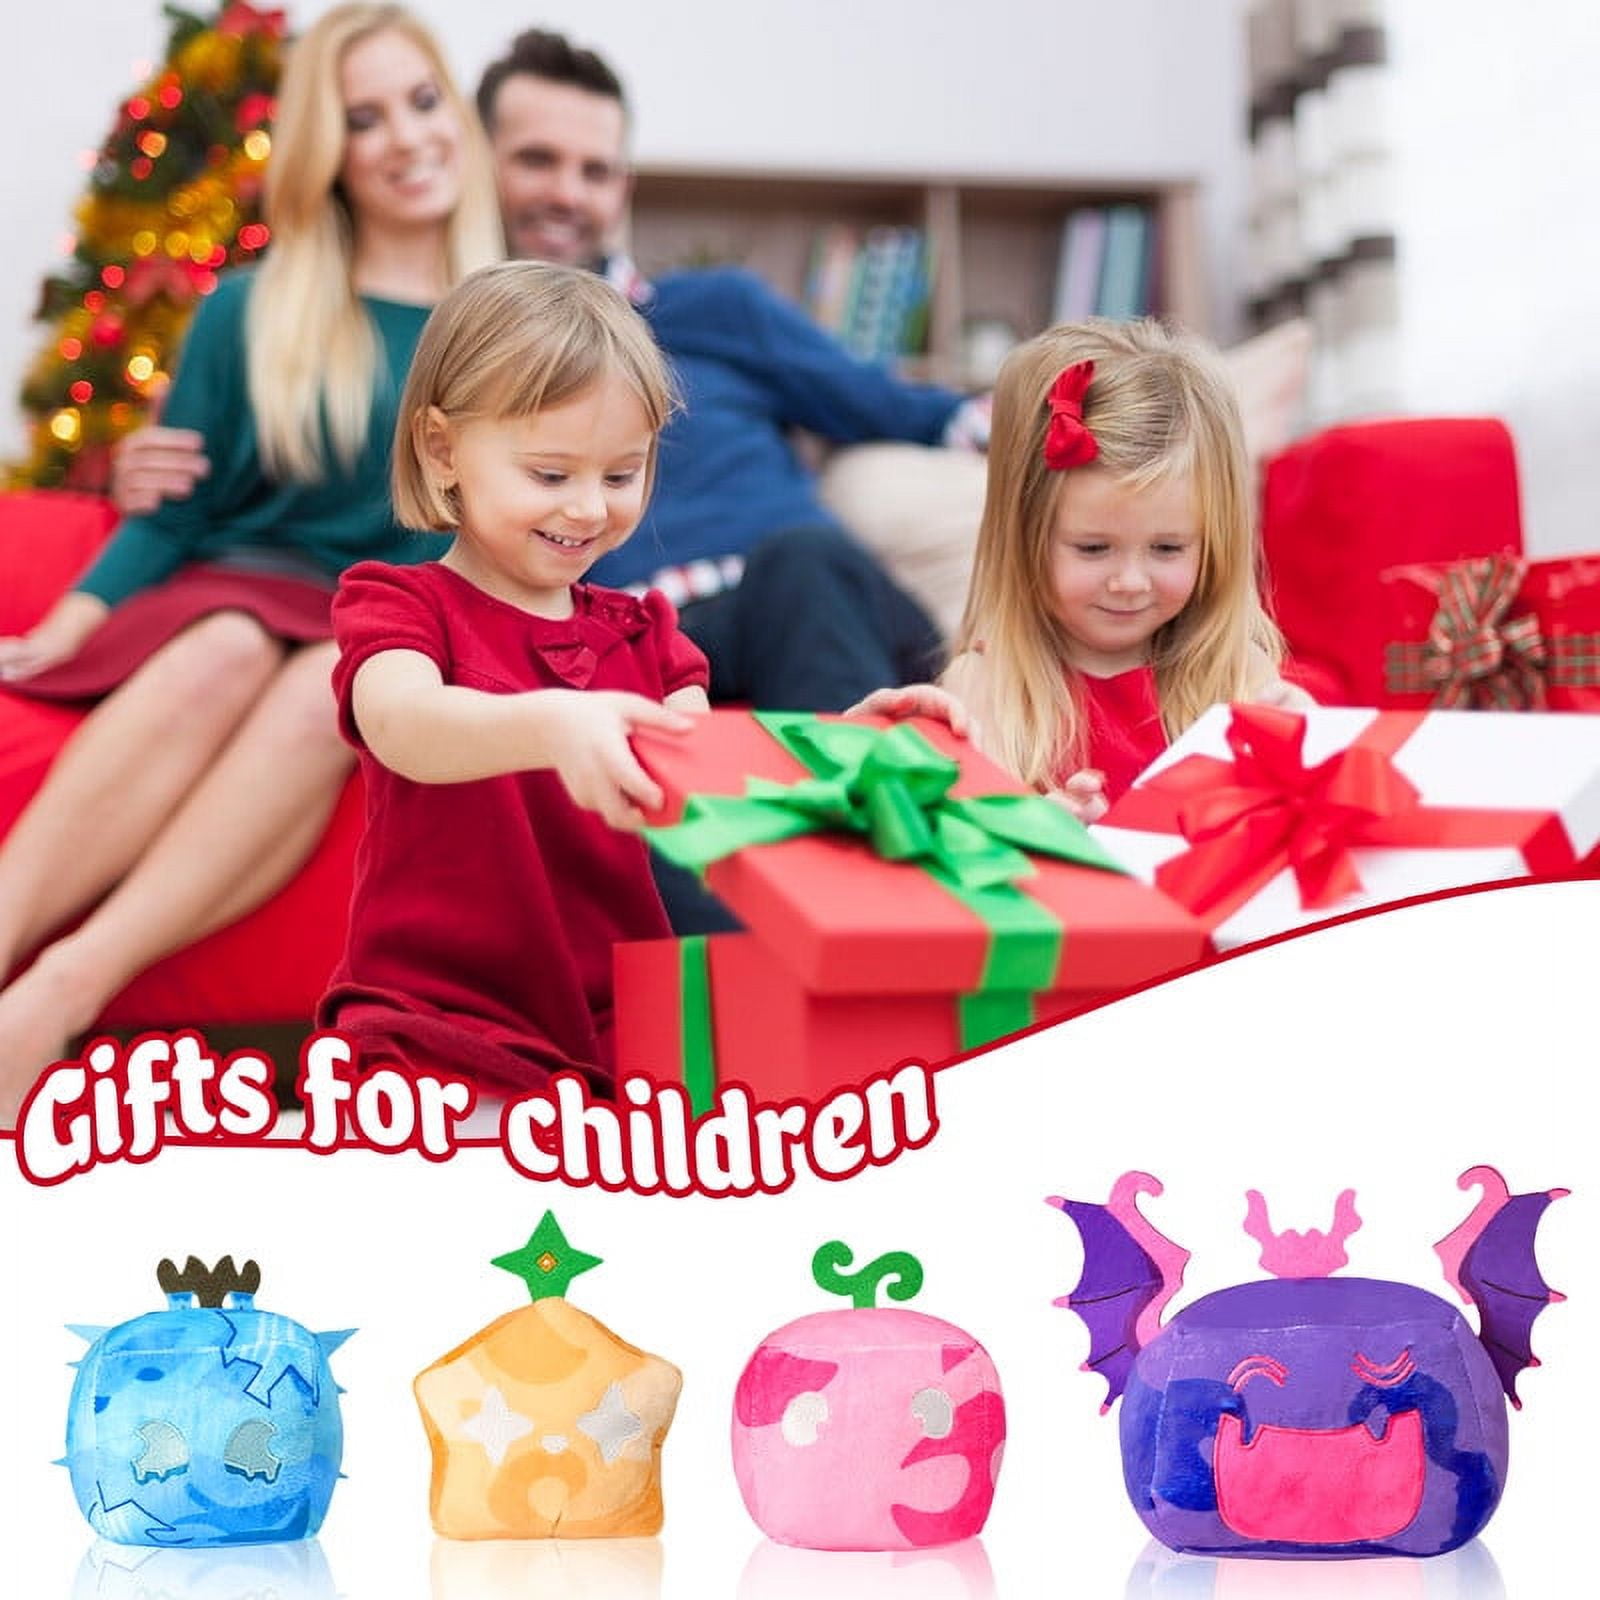  6 Blox Fruits Plush Plushies Toy Plush Pillow Stuffed Animal,  Soft Kawaii Hugging Plush Squishy Pillow Toy Gifts for Kids Child Teens  Home Bedroom Decor (Portal) : Toys & Games